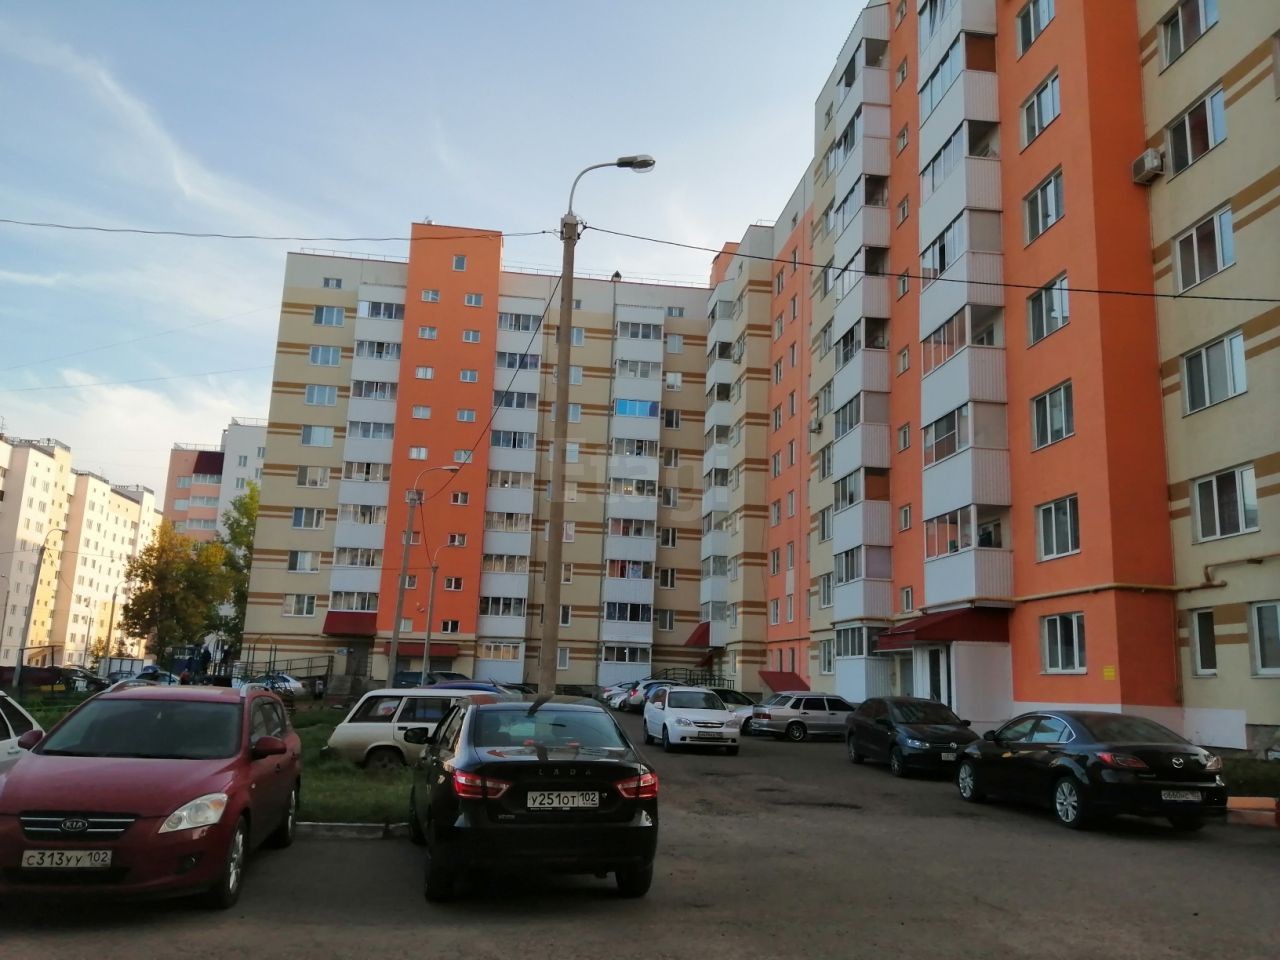 Респ. Башкортостан, г. Стерлитамак, ул. Николаева, д. 18-фасад здания